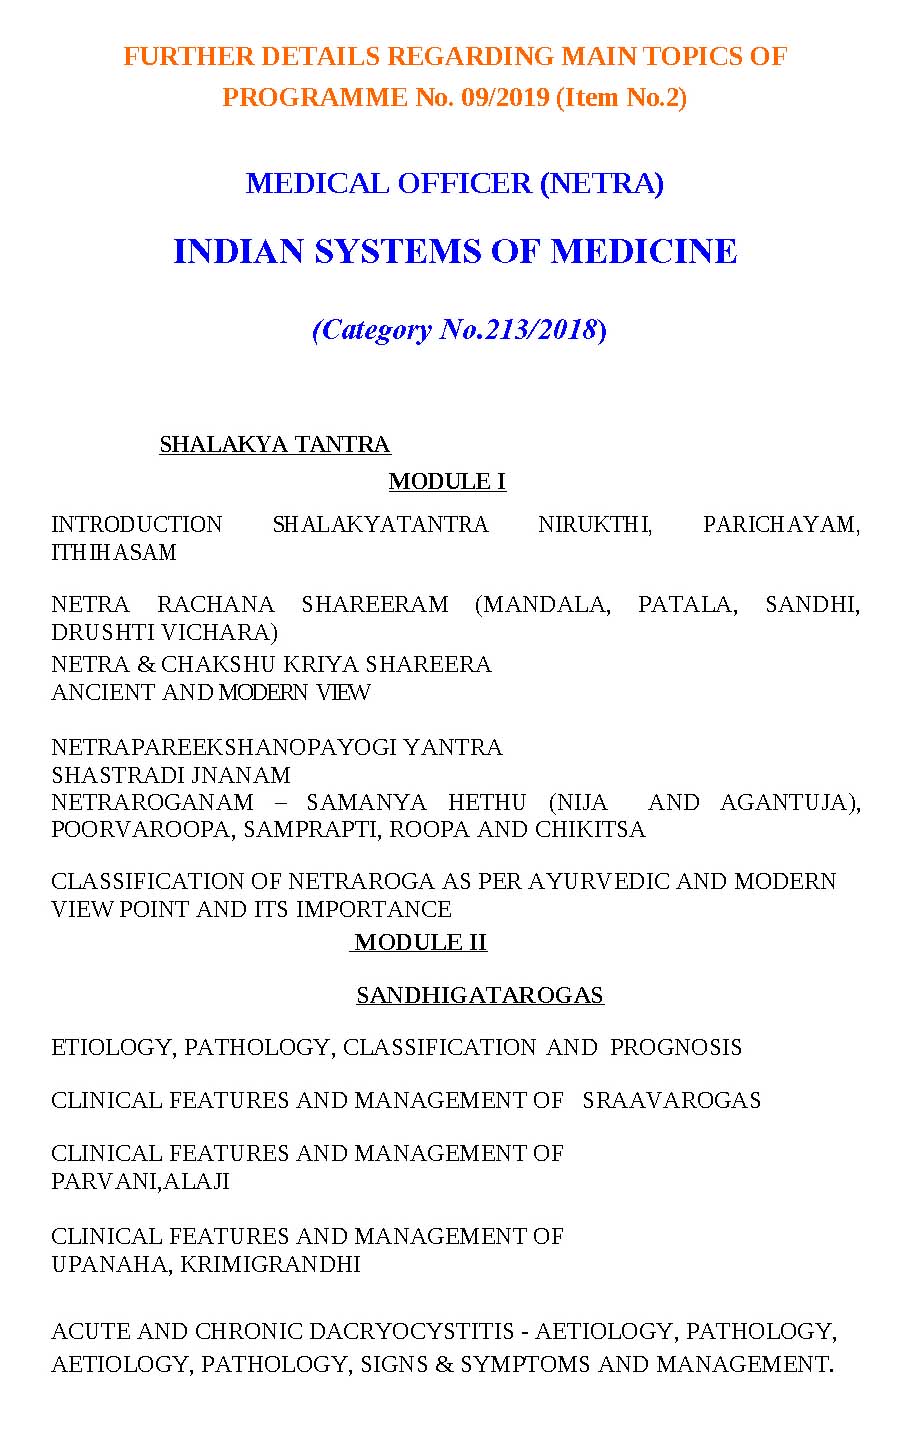 Kerala PSC Syllabus 2019 Medical Officer Netra - Notification Image 1